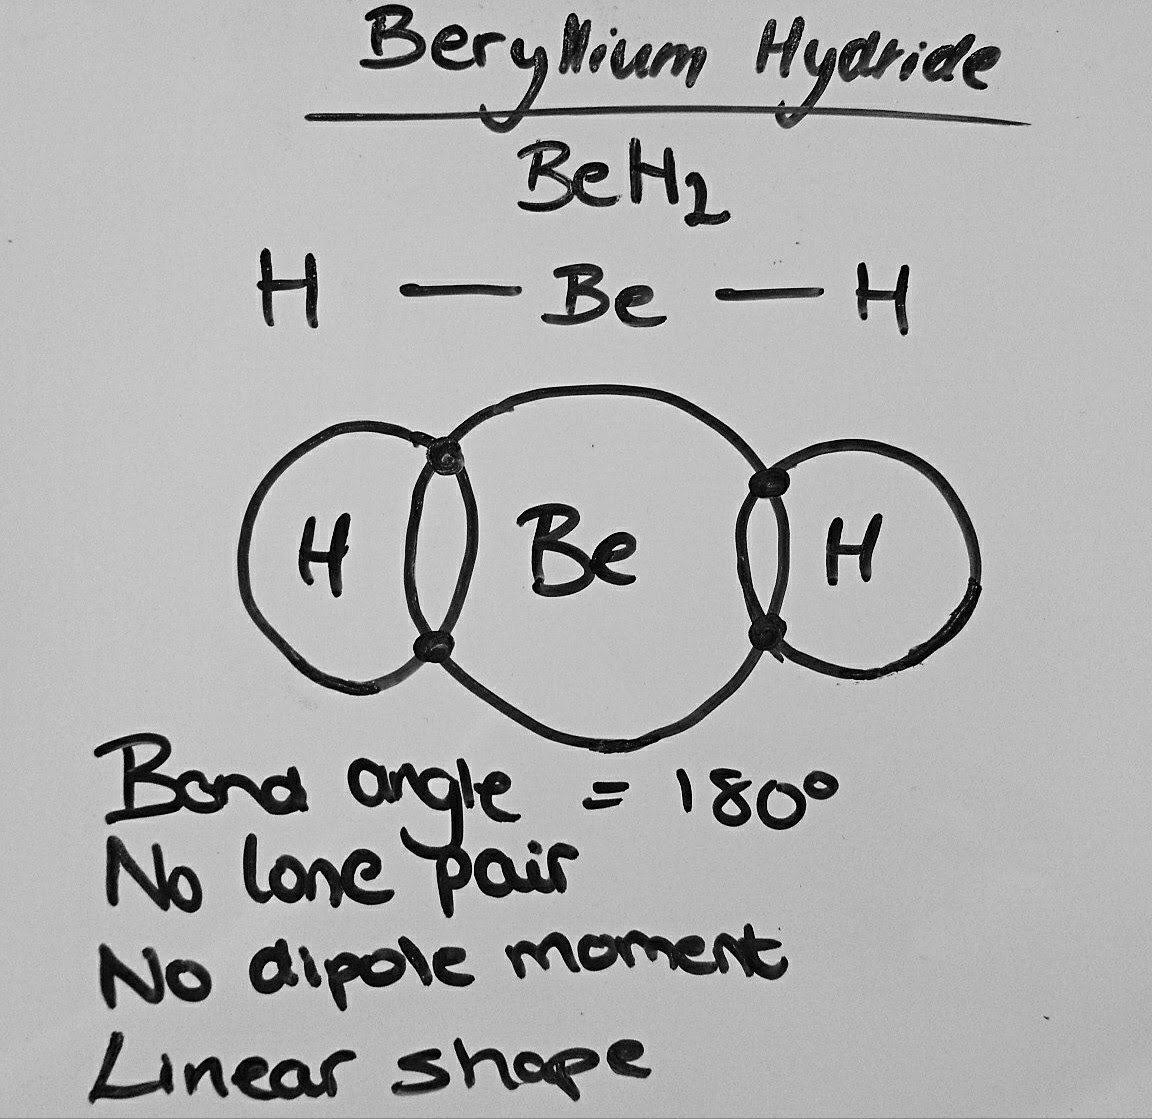 Beryllium Hydride